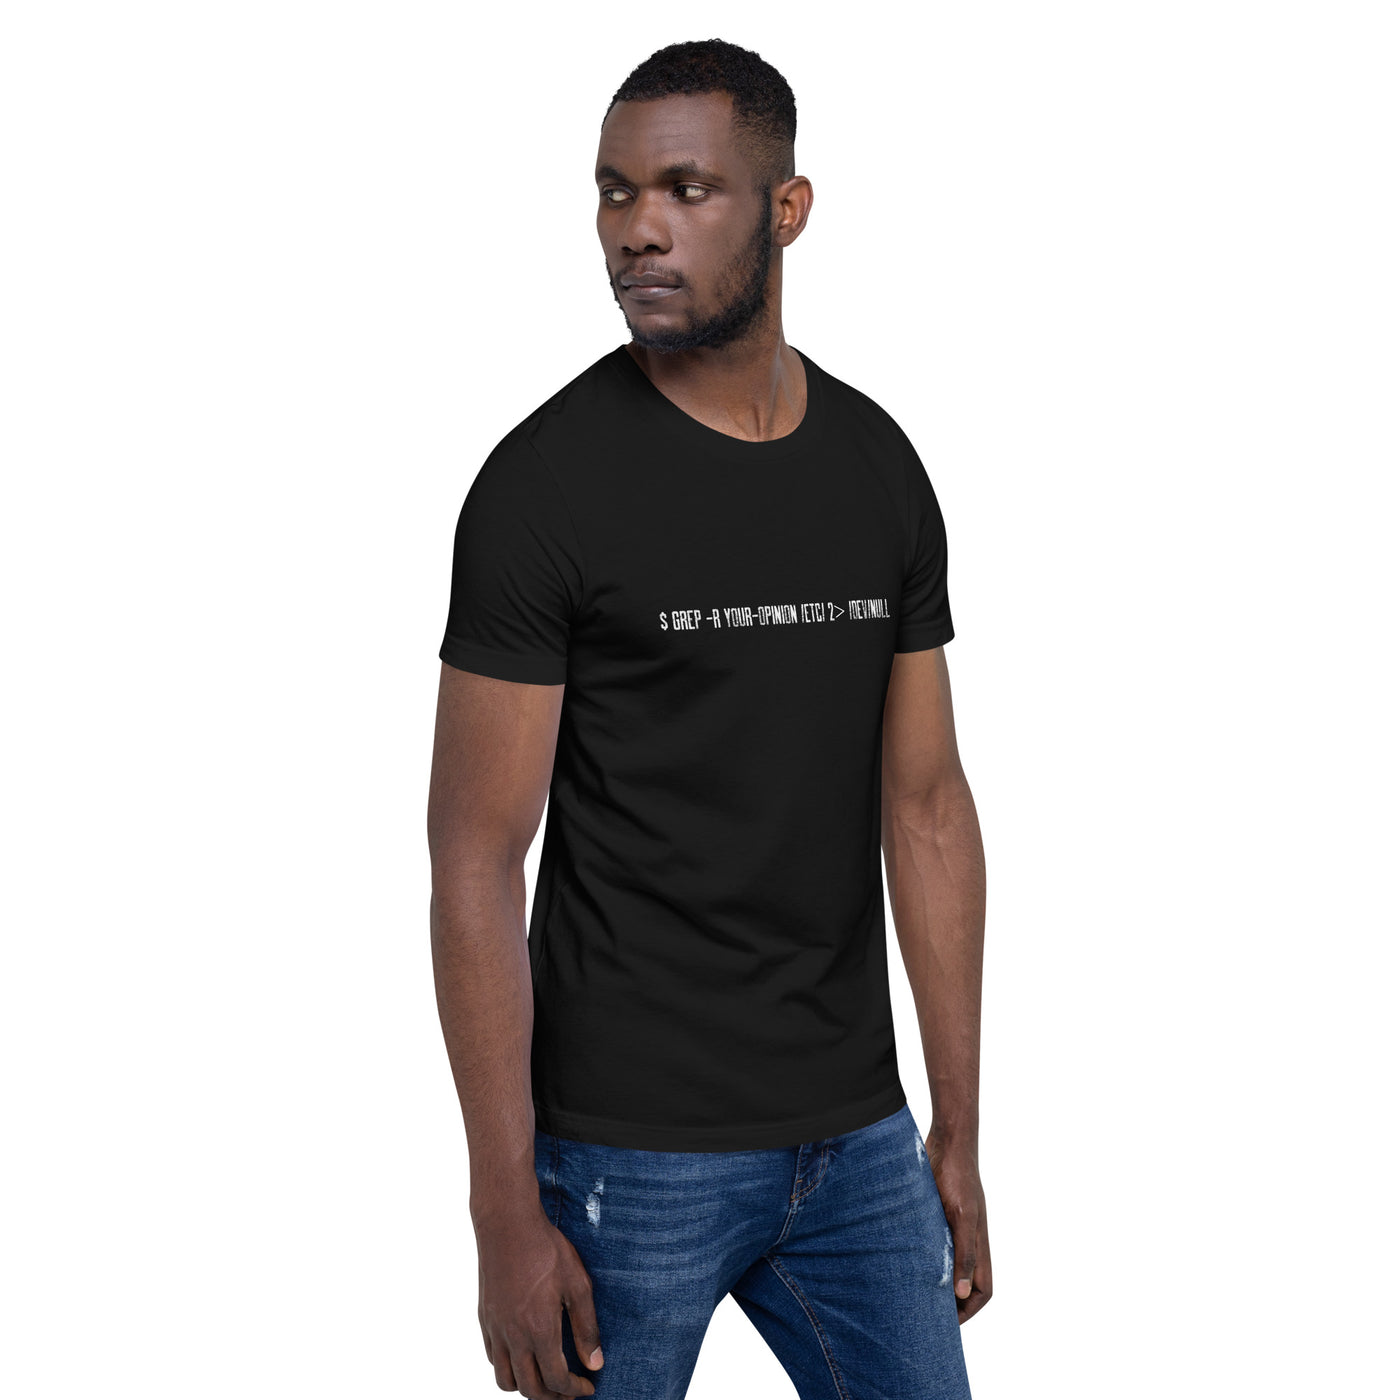 Grep r your Opinion etc 2 devnull - Unisex t-shirt